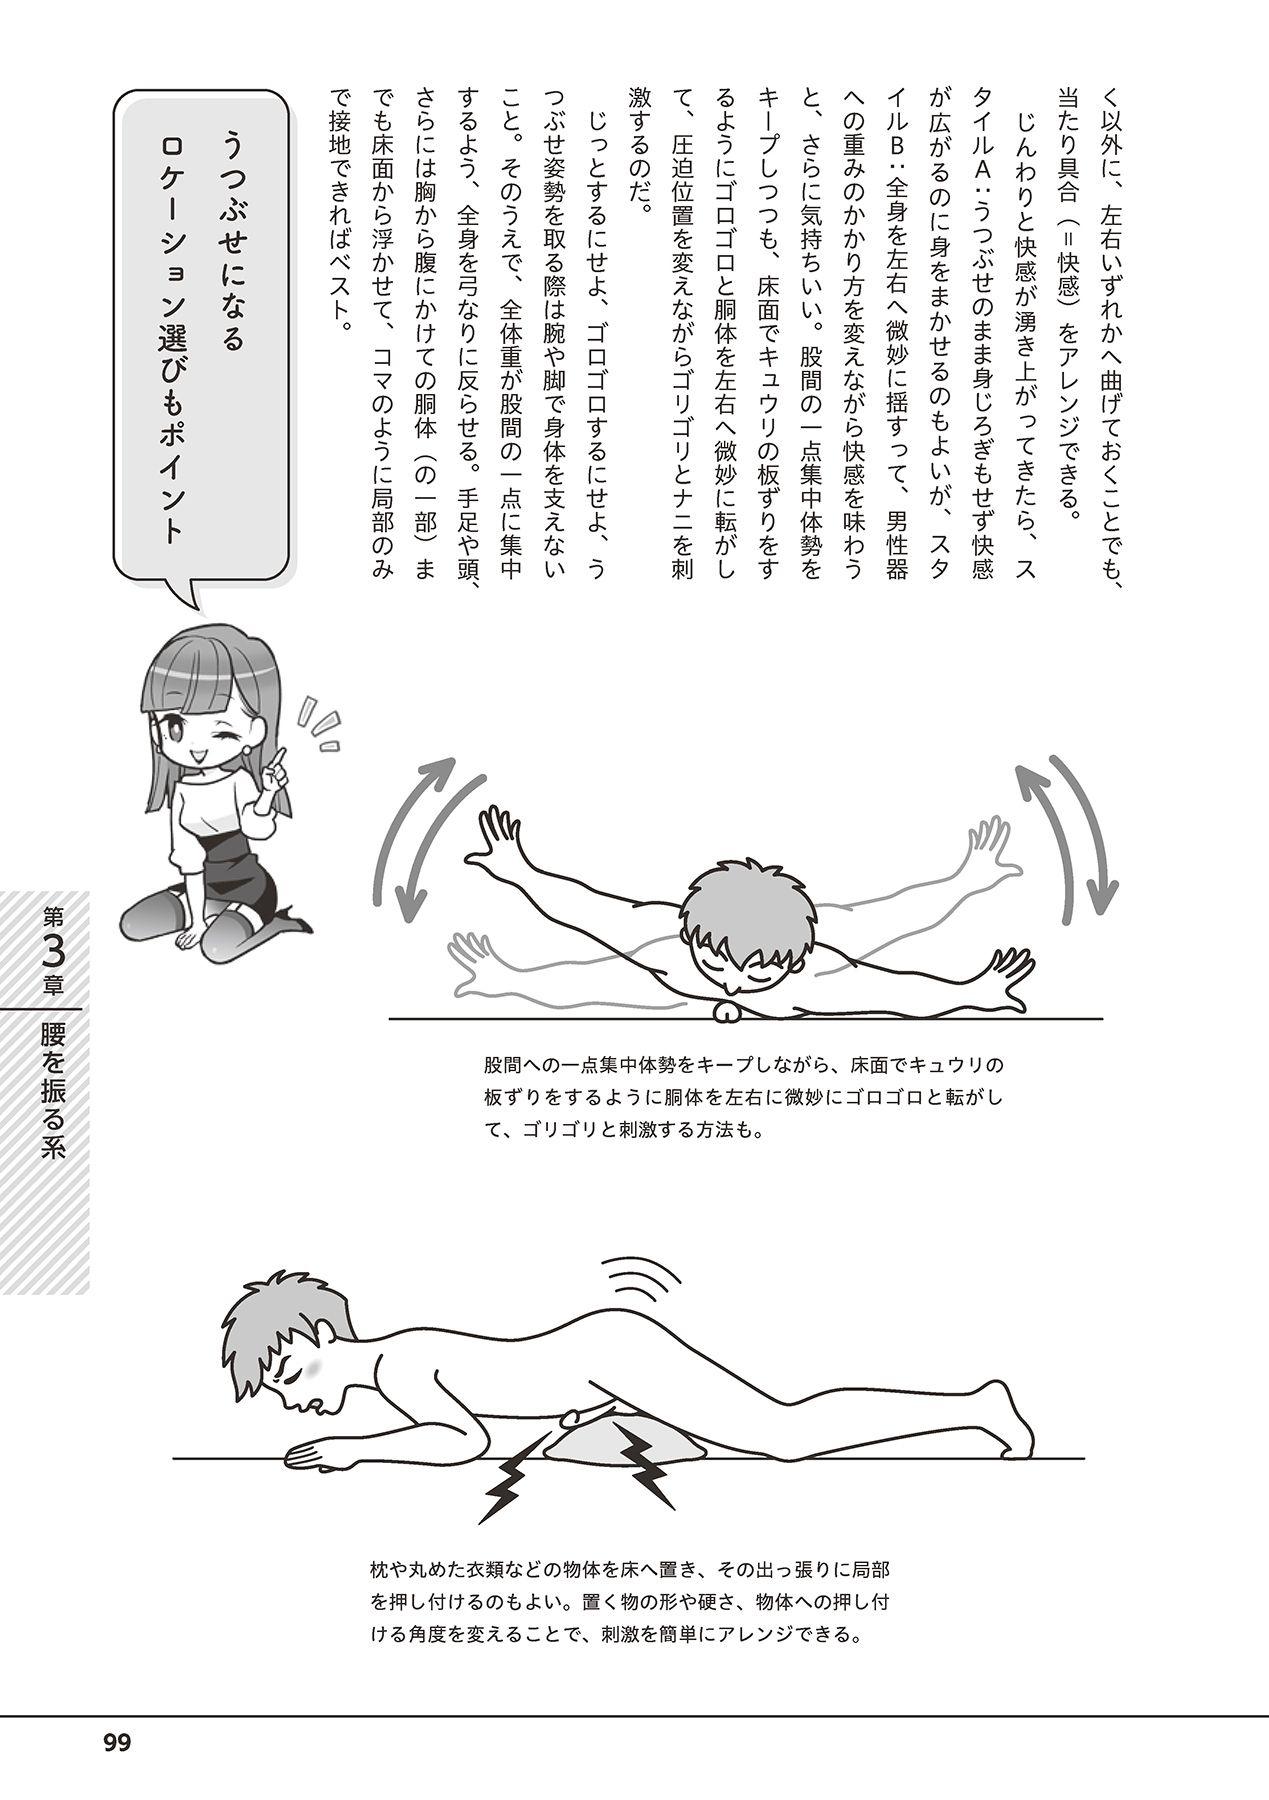 Otoko no Jii Onanie Kanzen Manual Illustration Han...... Onanie Play 100